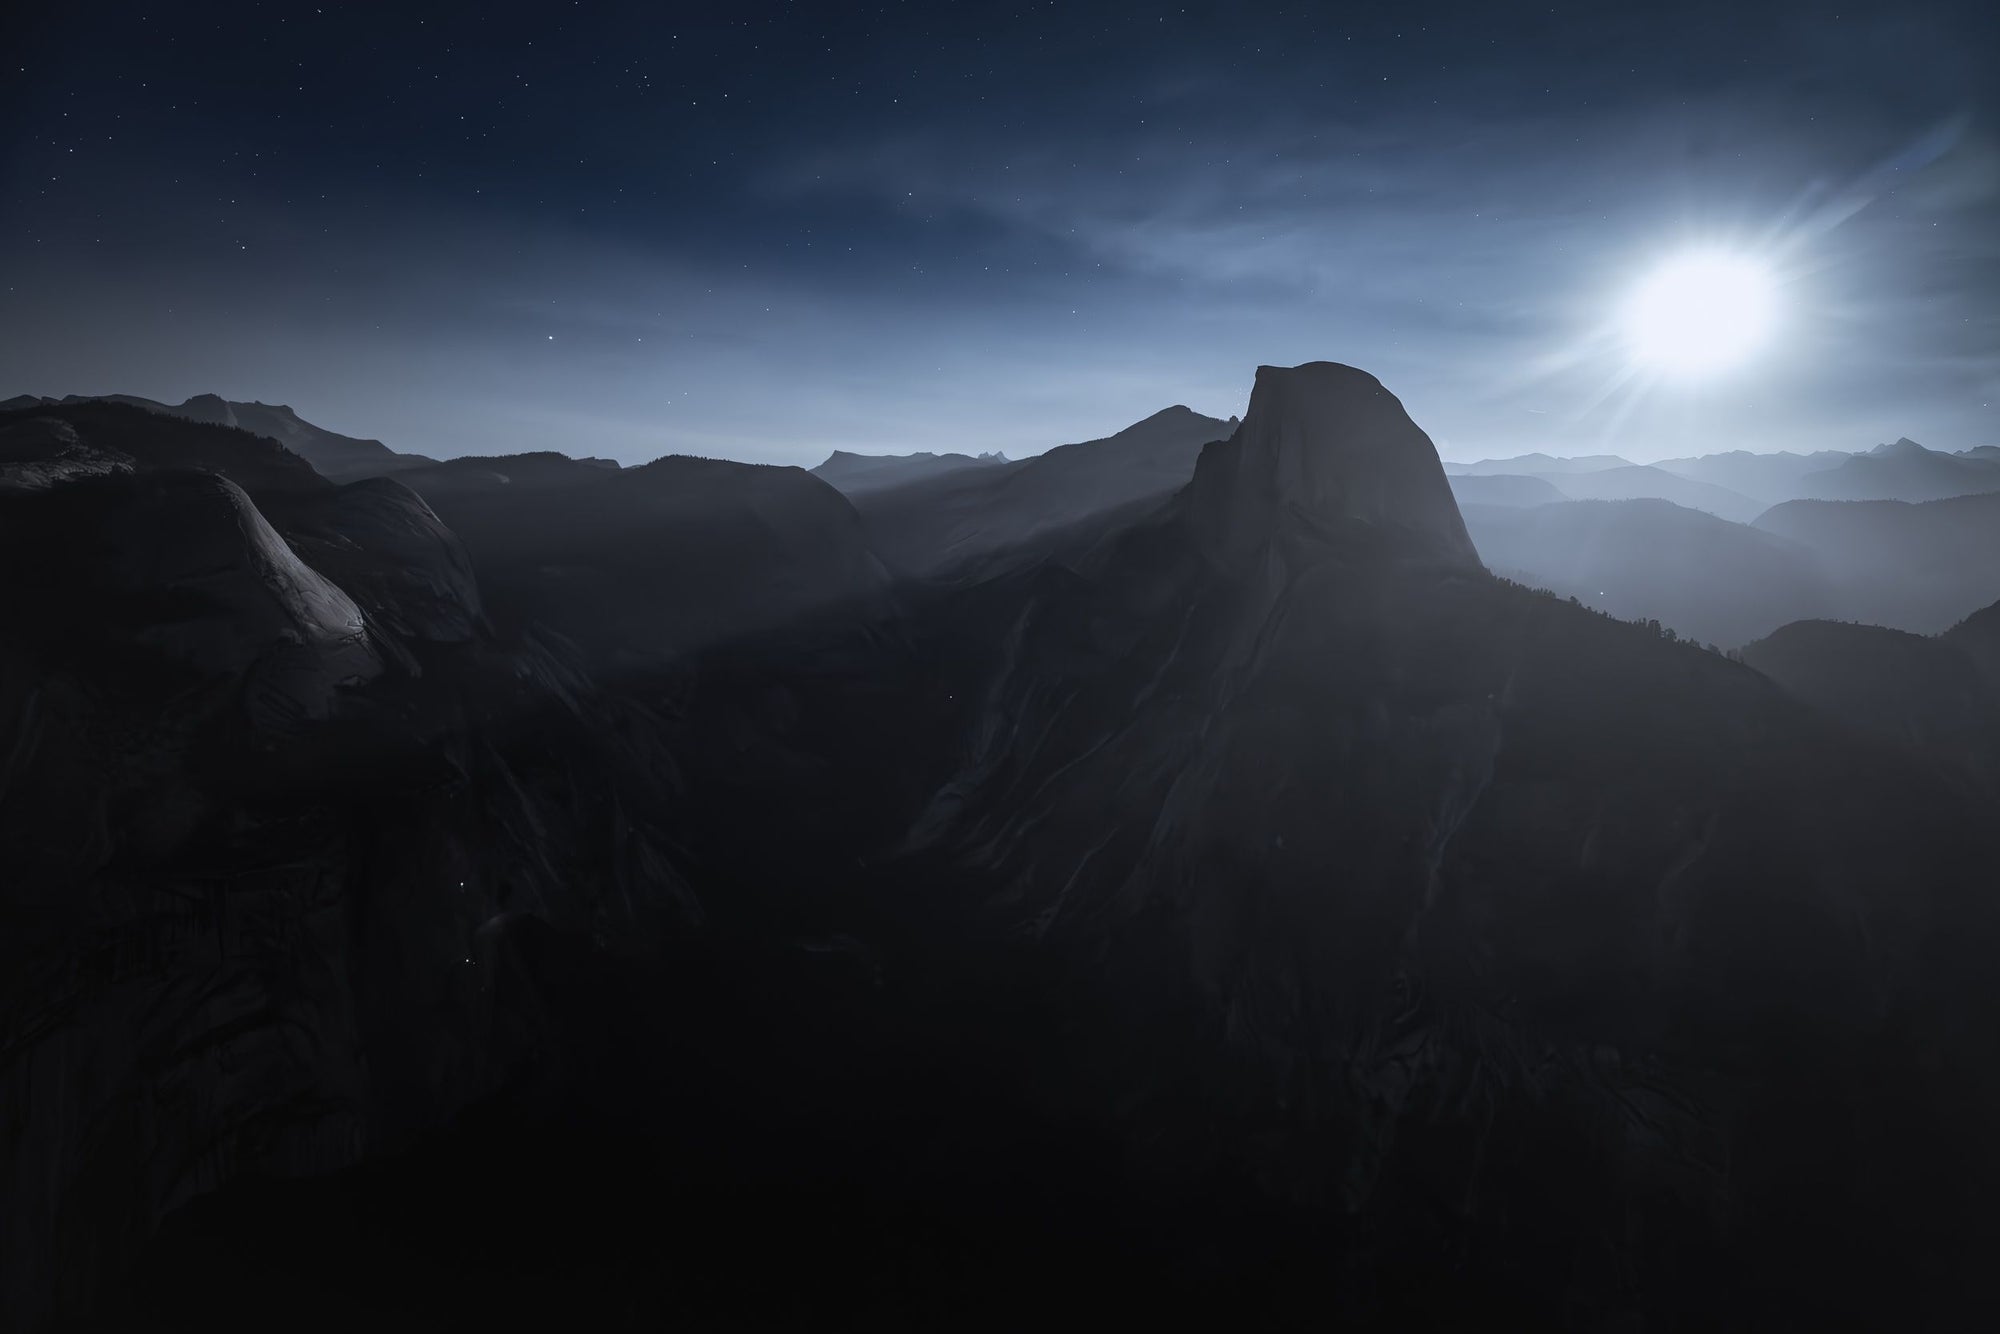 A full moon rises above Half Dome in Yosemite.